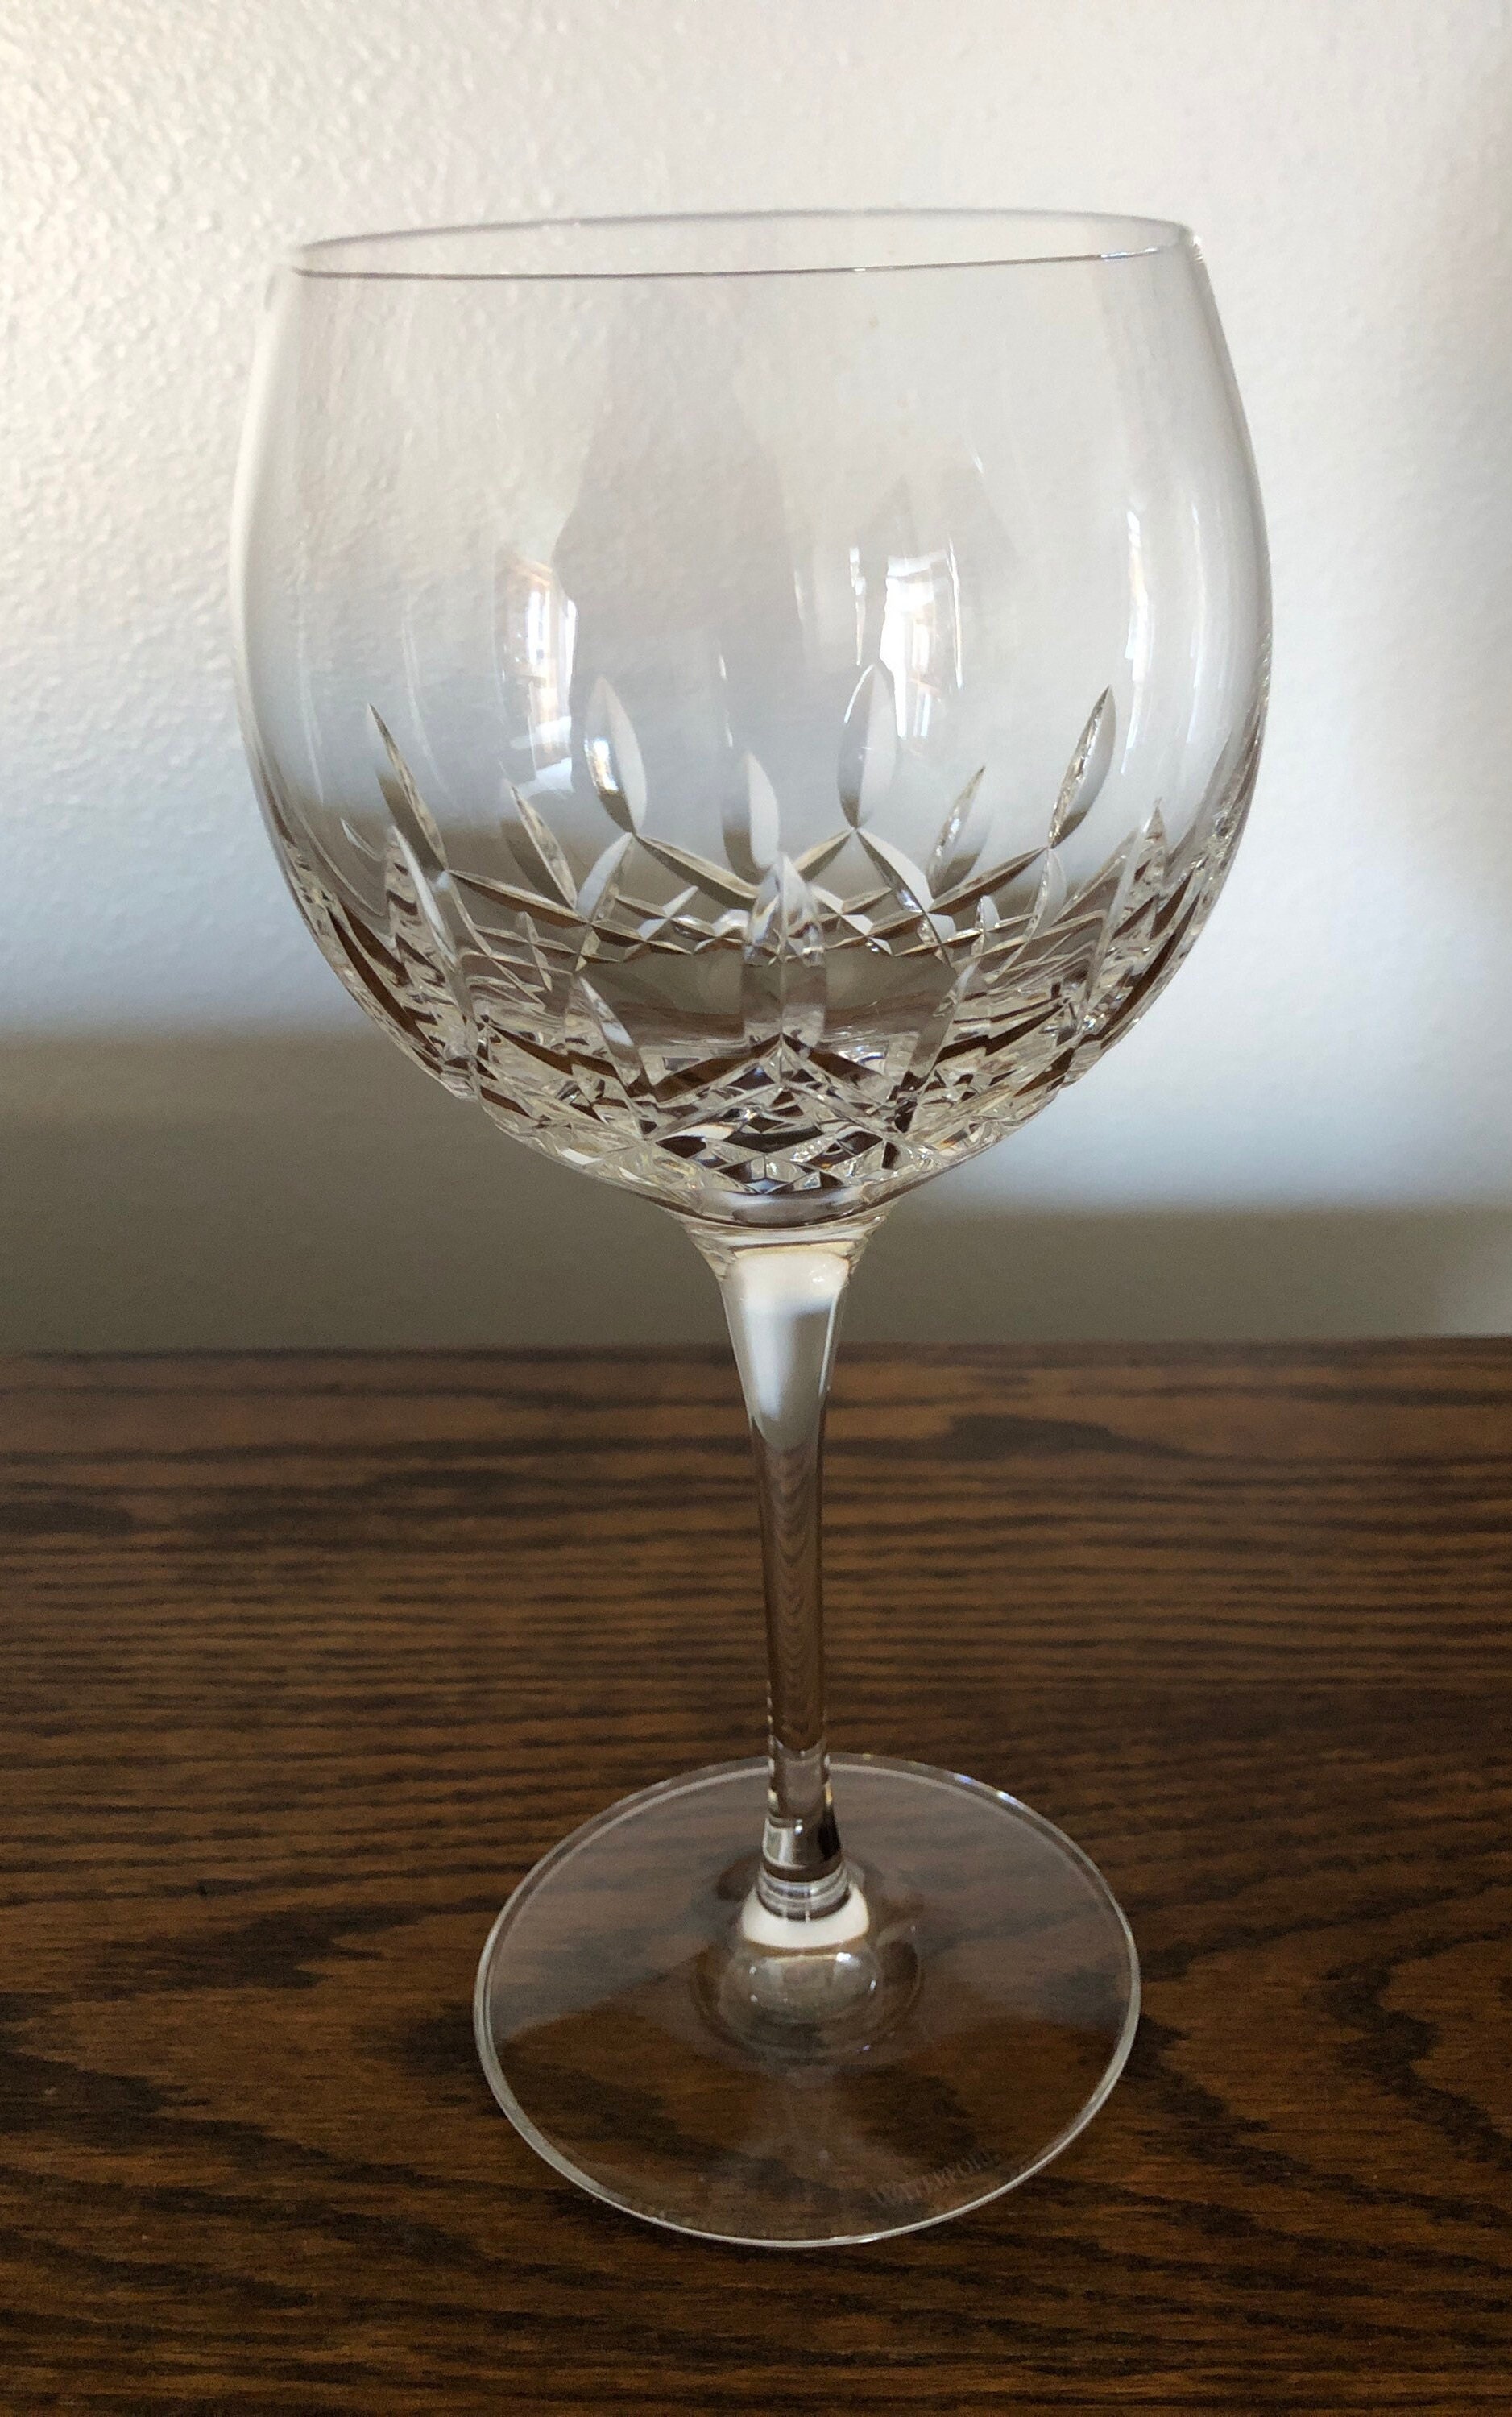 Waterford Crystal Lismore Essence White Wine Glasses, Set of 2 | Dillard's